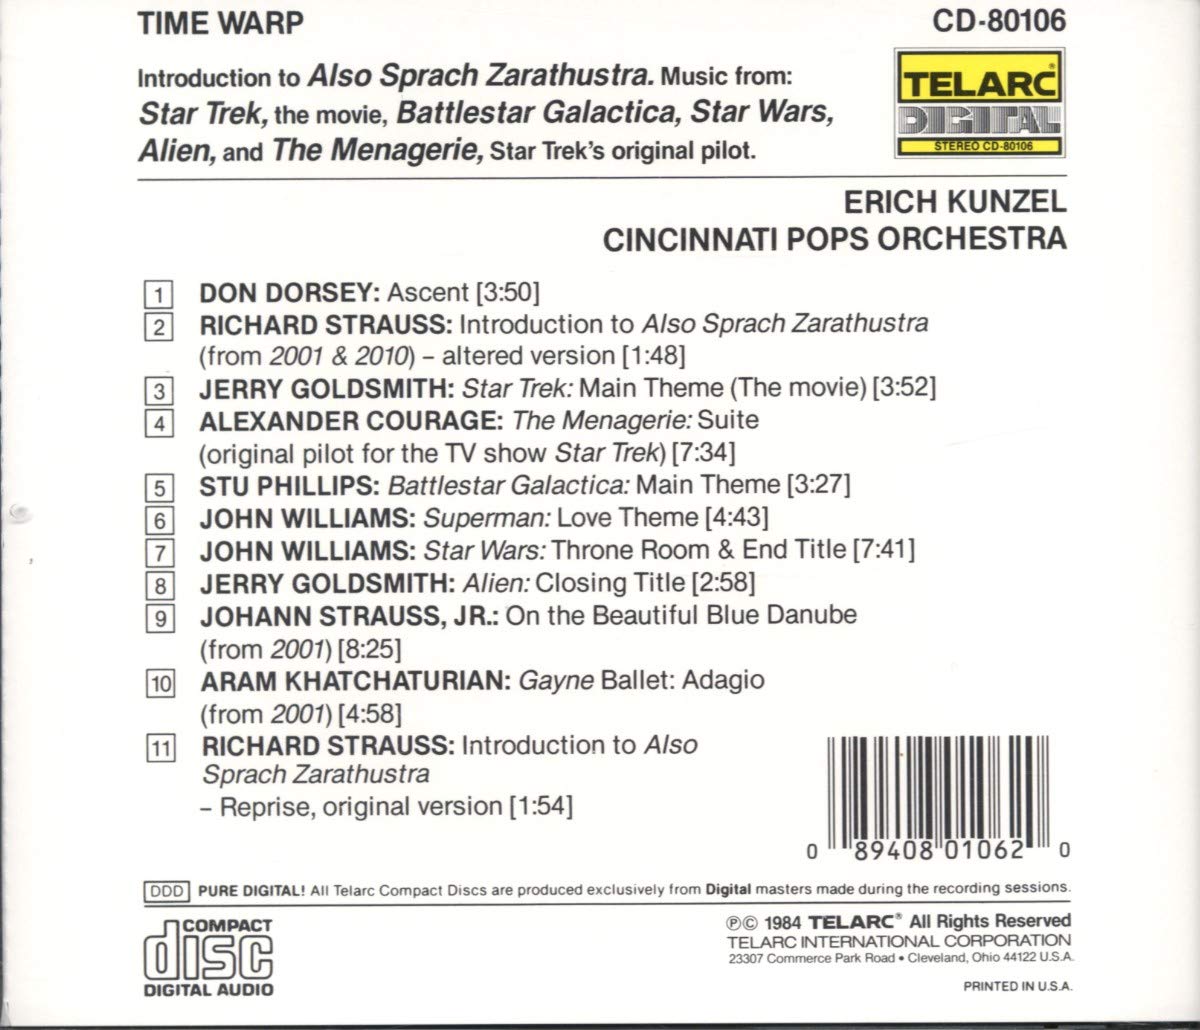 TIME WARP - Erich Kunzel, Cincinnati Pops Orchestra